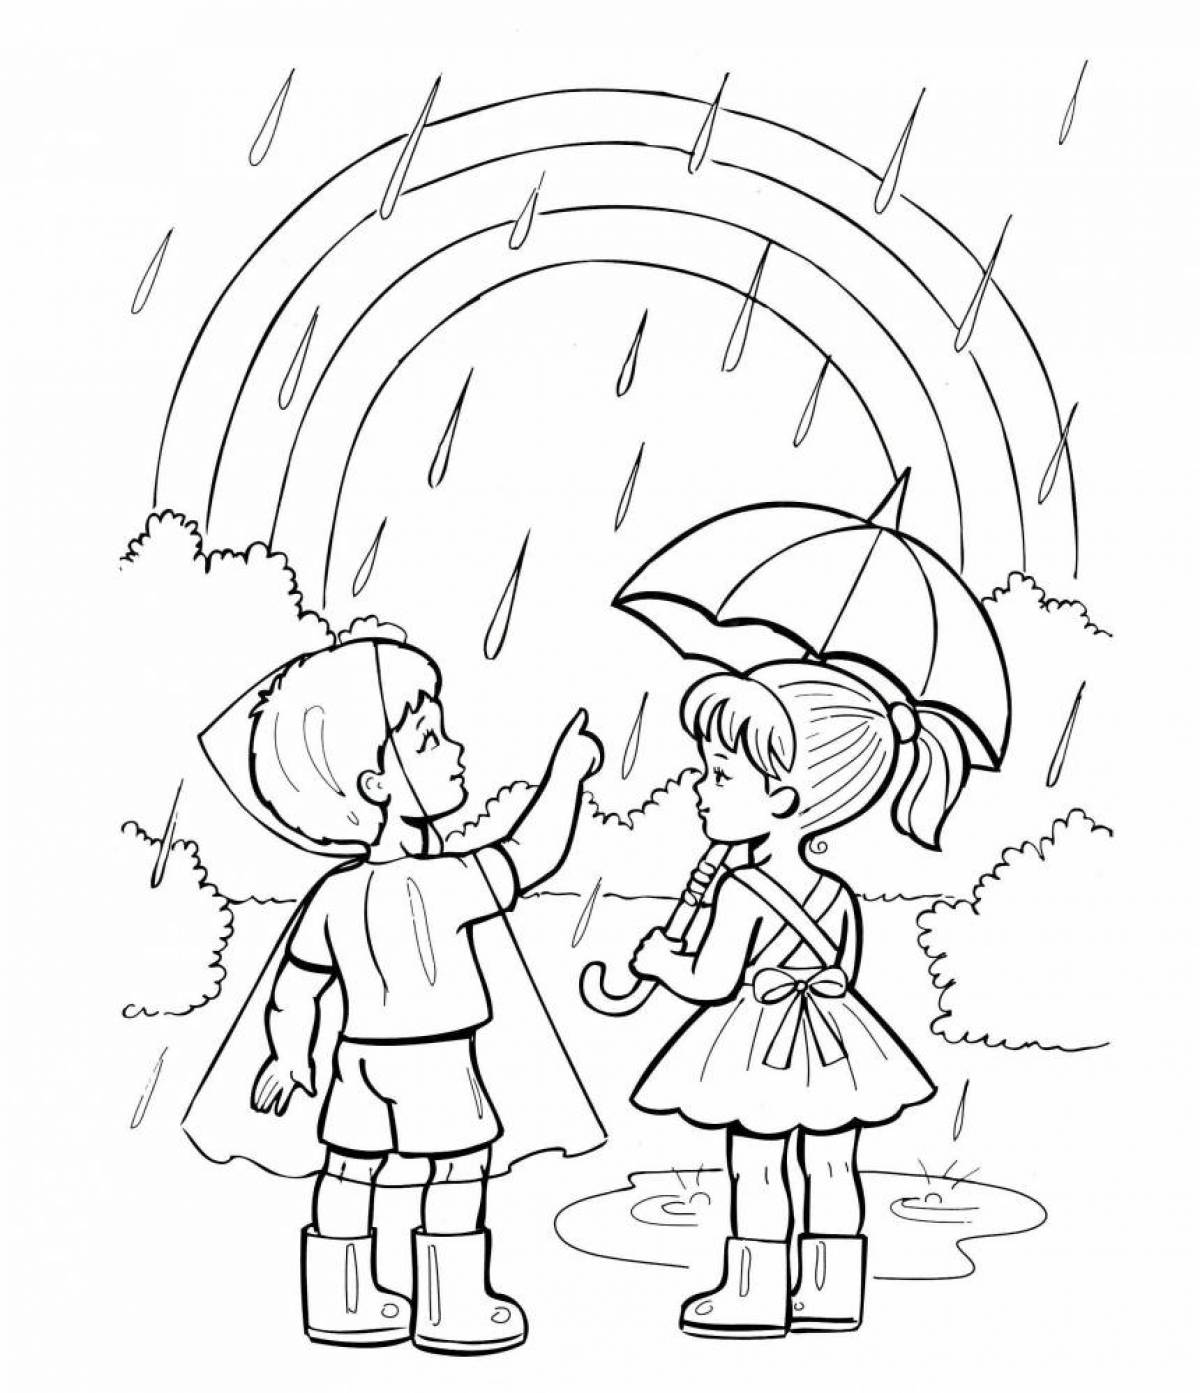 Boy and girl in the rain